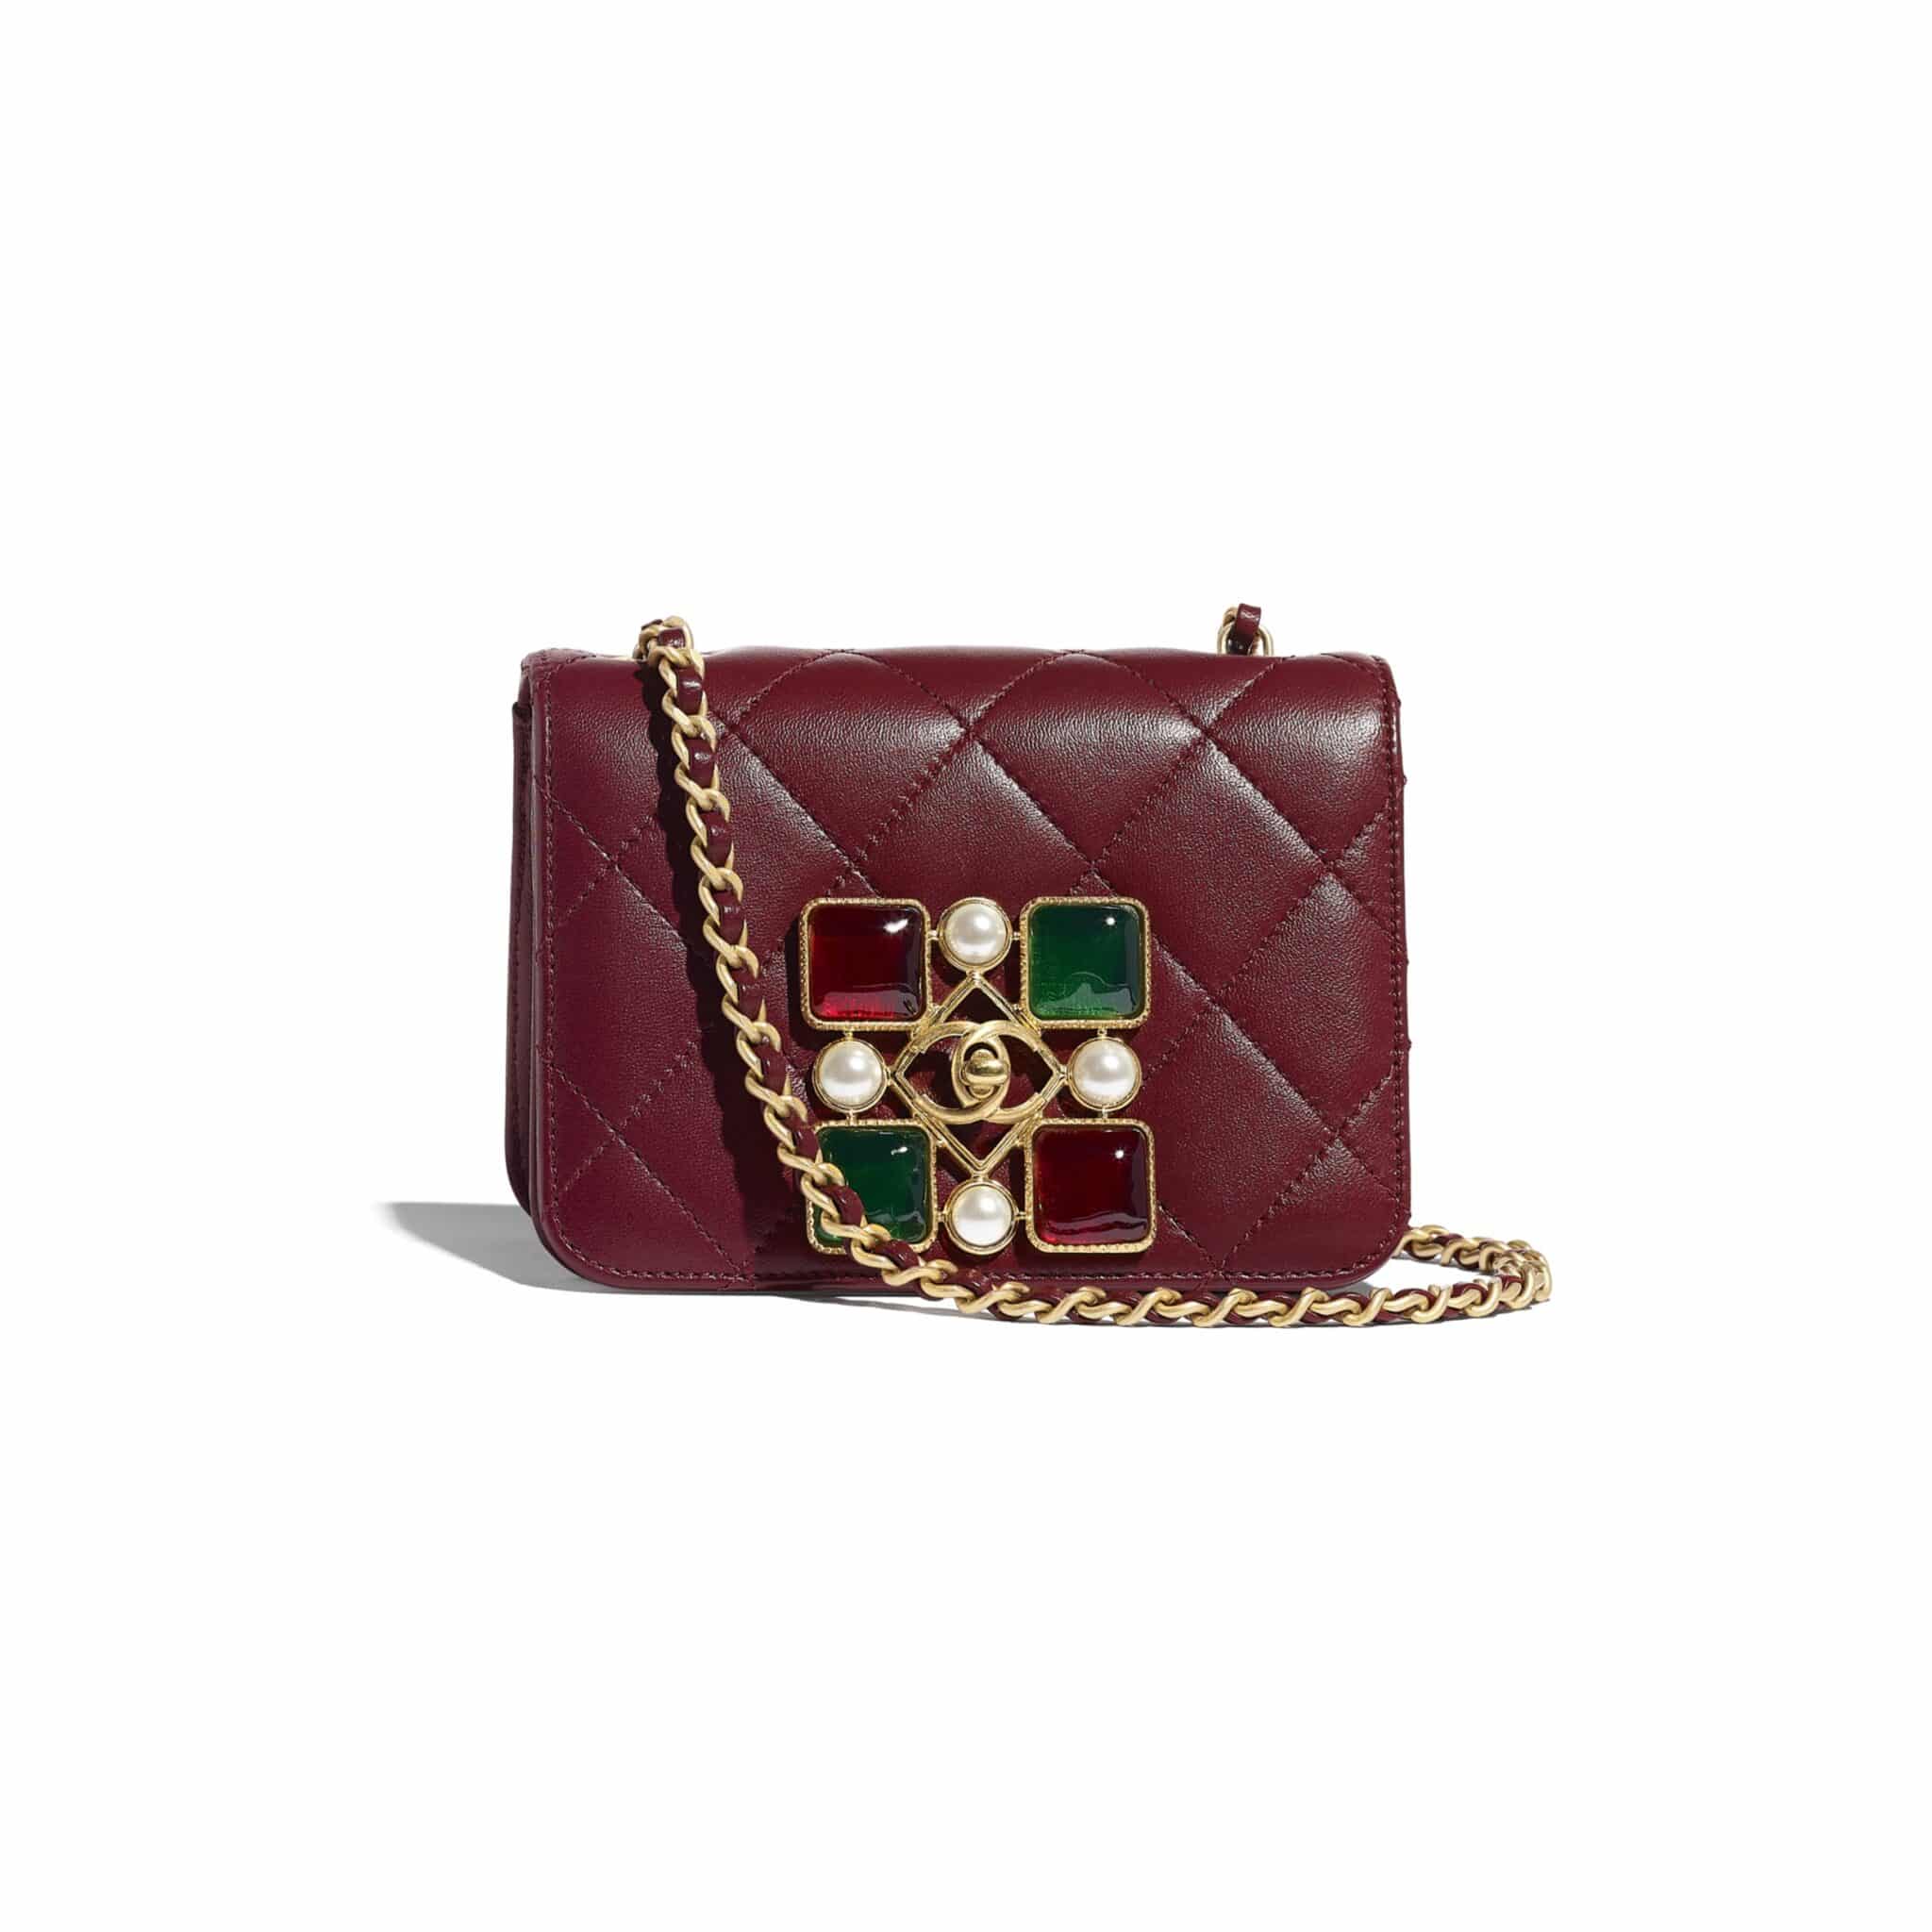 Chanel Burgundy Calfskin and Crystal Pearls Small Flap Bag